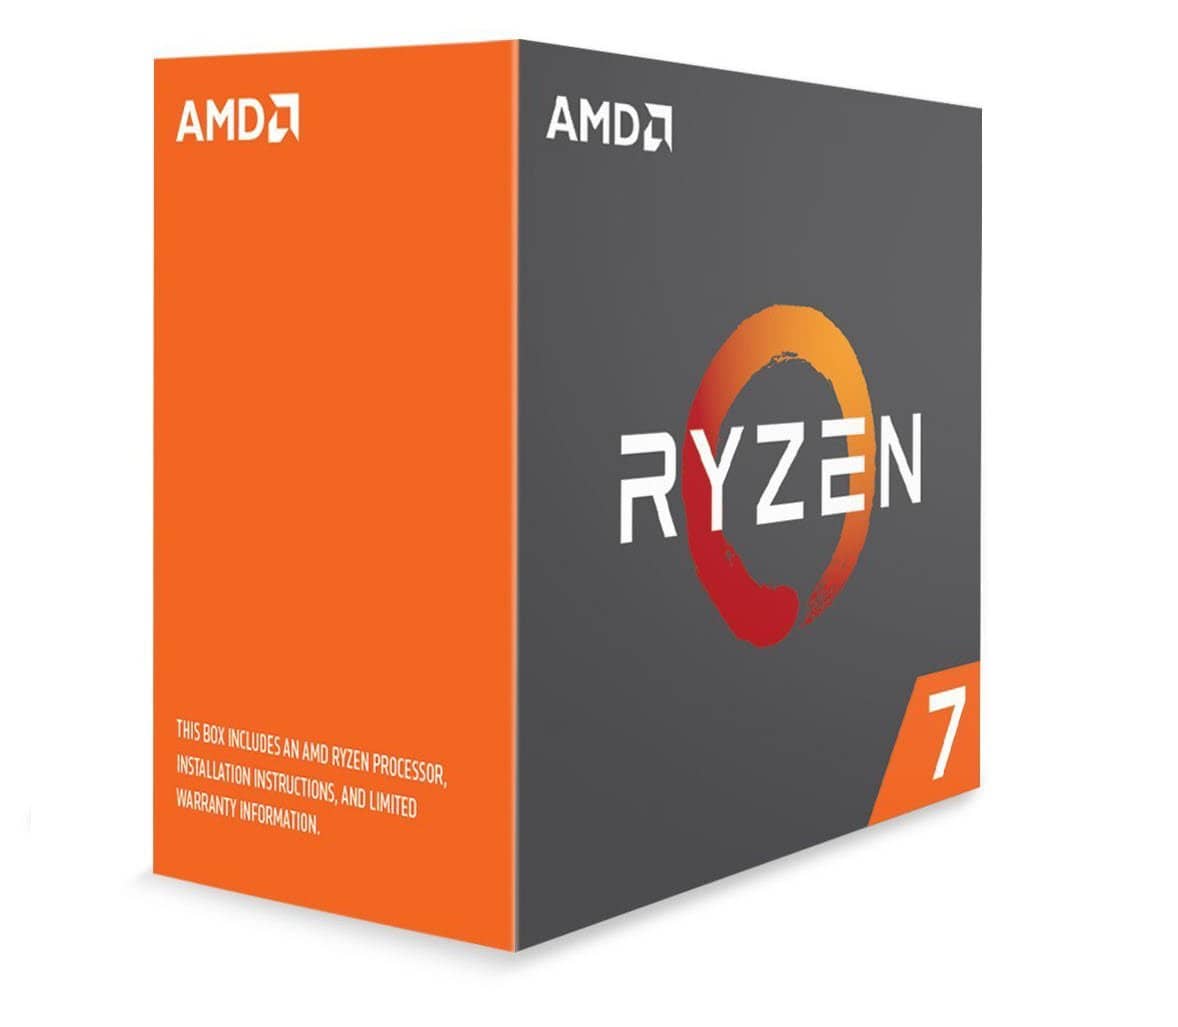 AMD Ryzen 1800X AM4 Processor with Corsair Hydro Series H110i 280mm Liquid Cooler